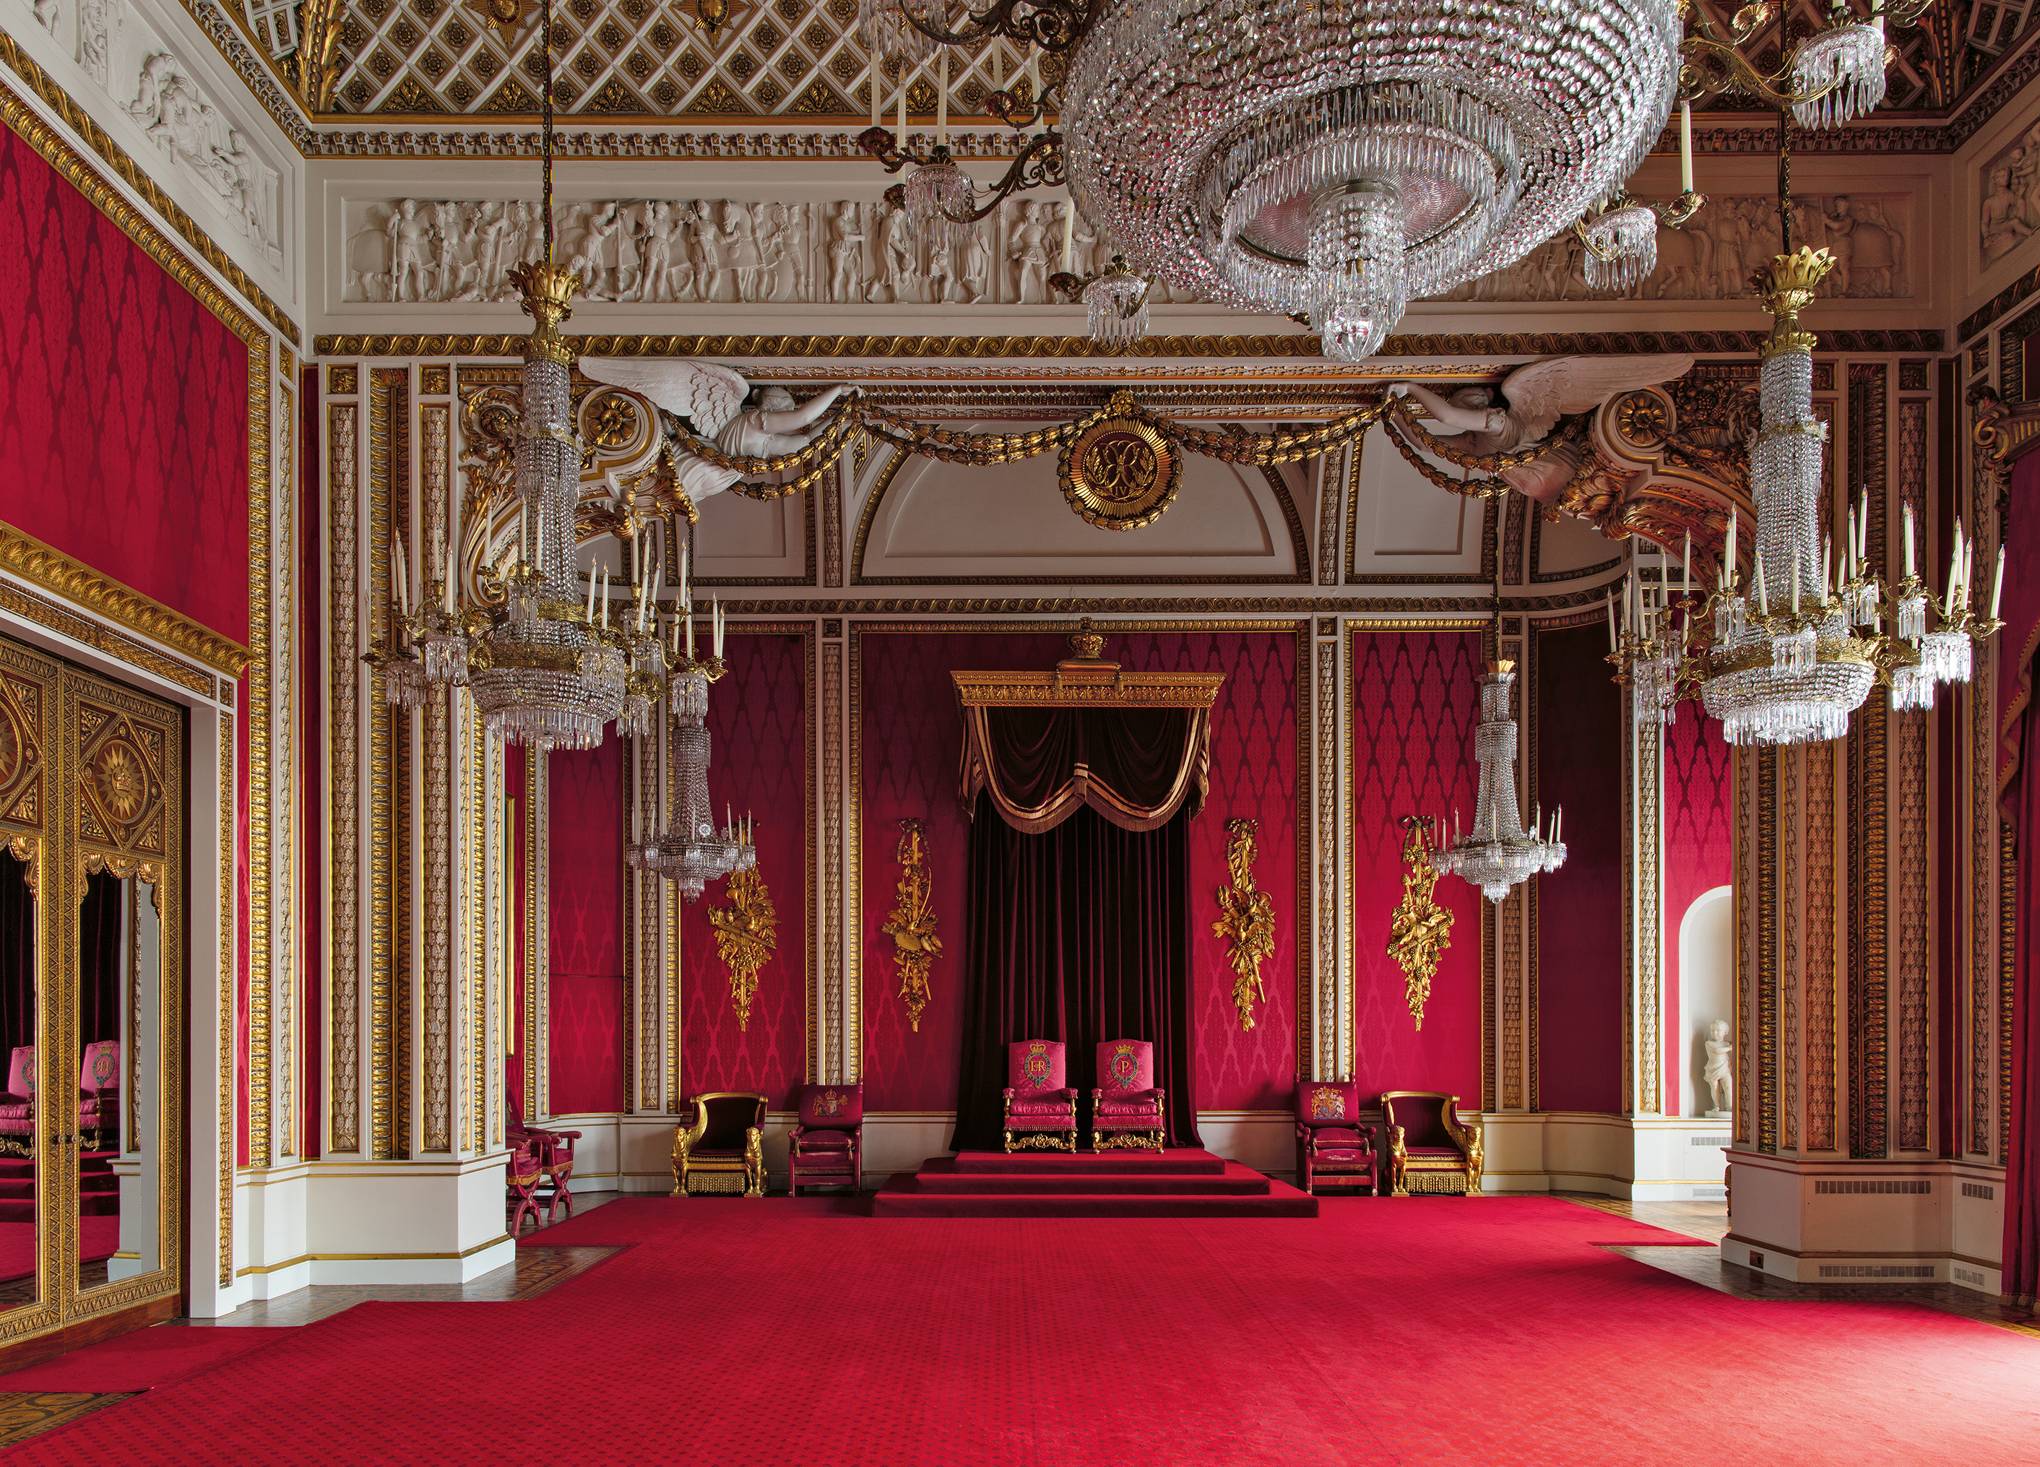 Клоун дворец. Королевский дворец Букингемский. Букингемский дворец бальный зал. Тронный зал Букингемского дворца. Букингемский дворец спальня королевы.